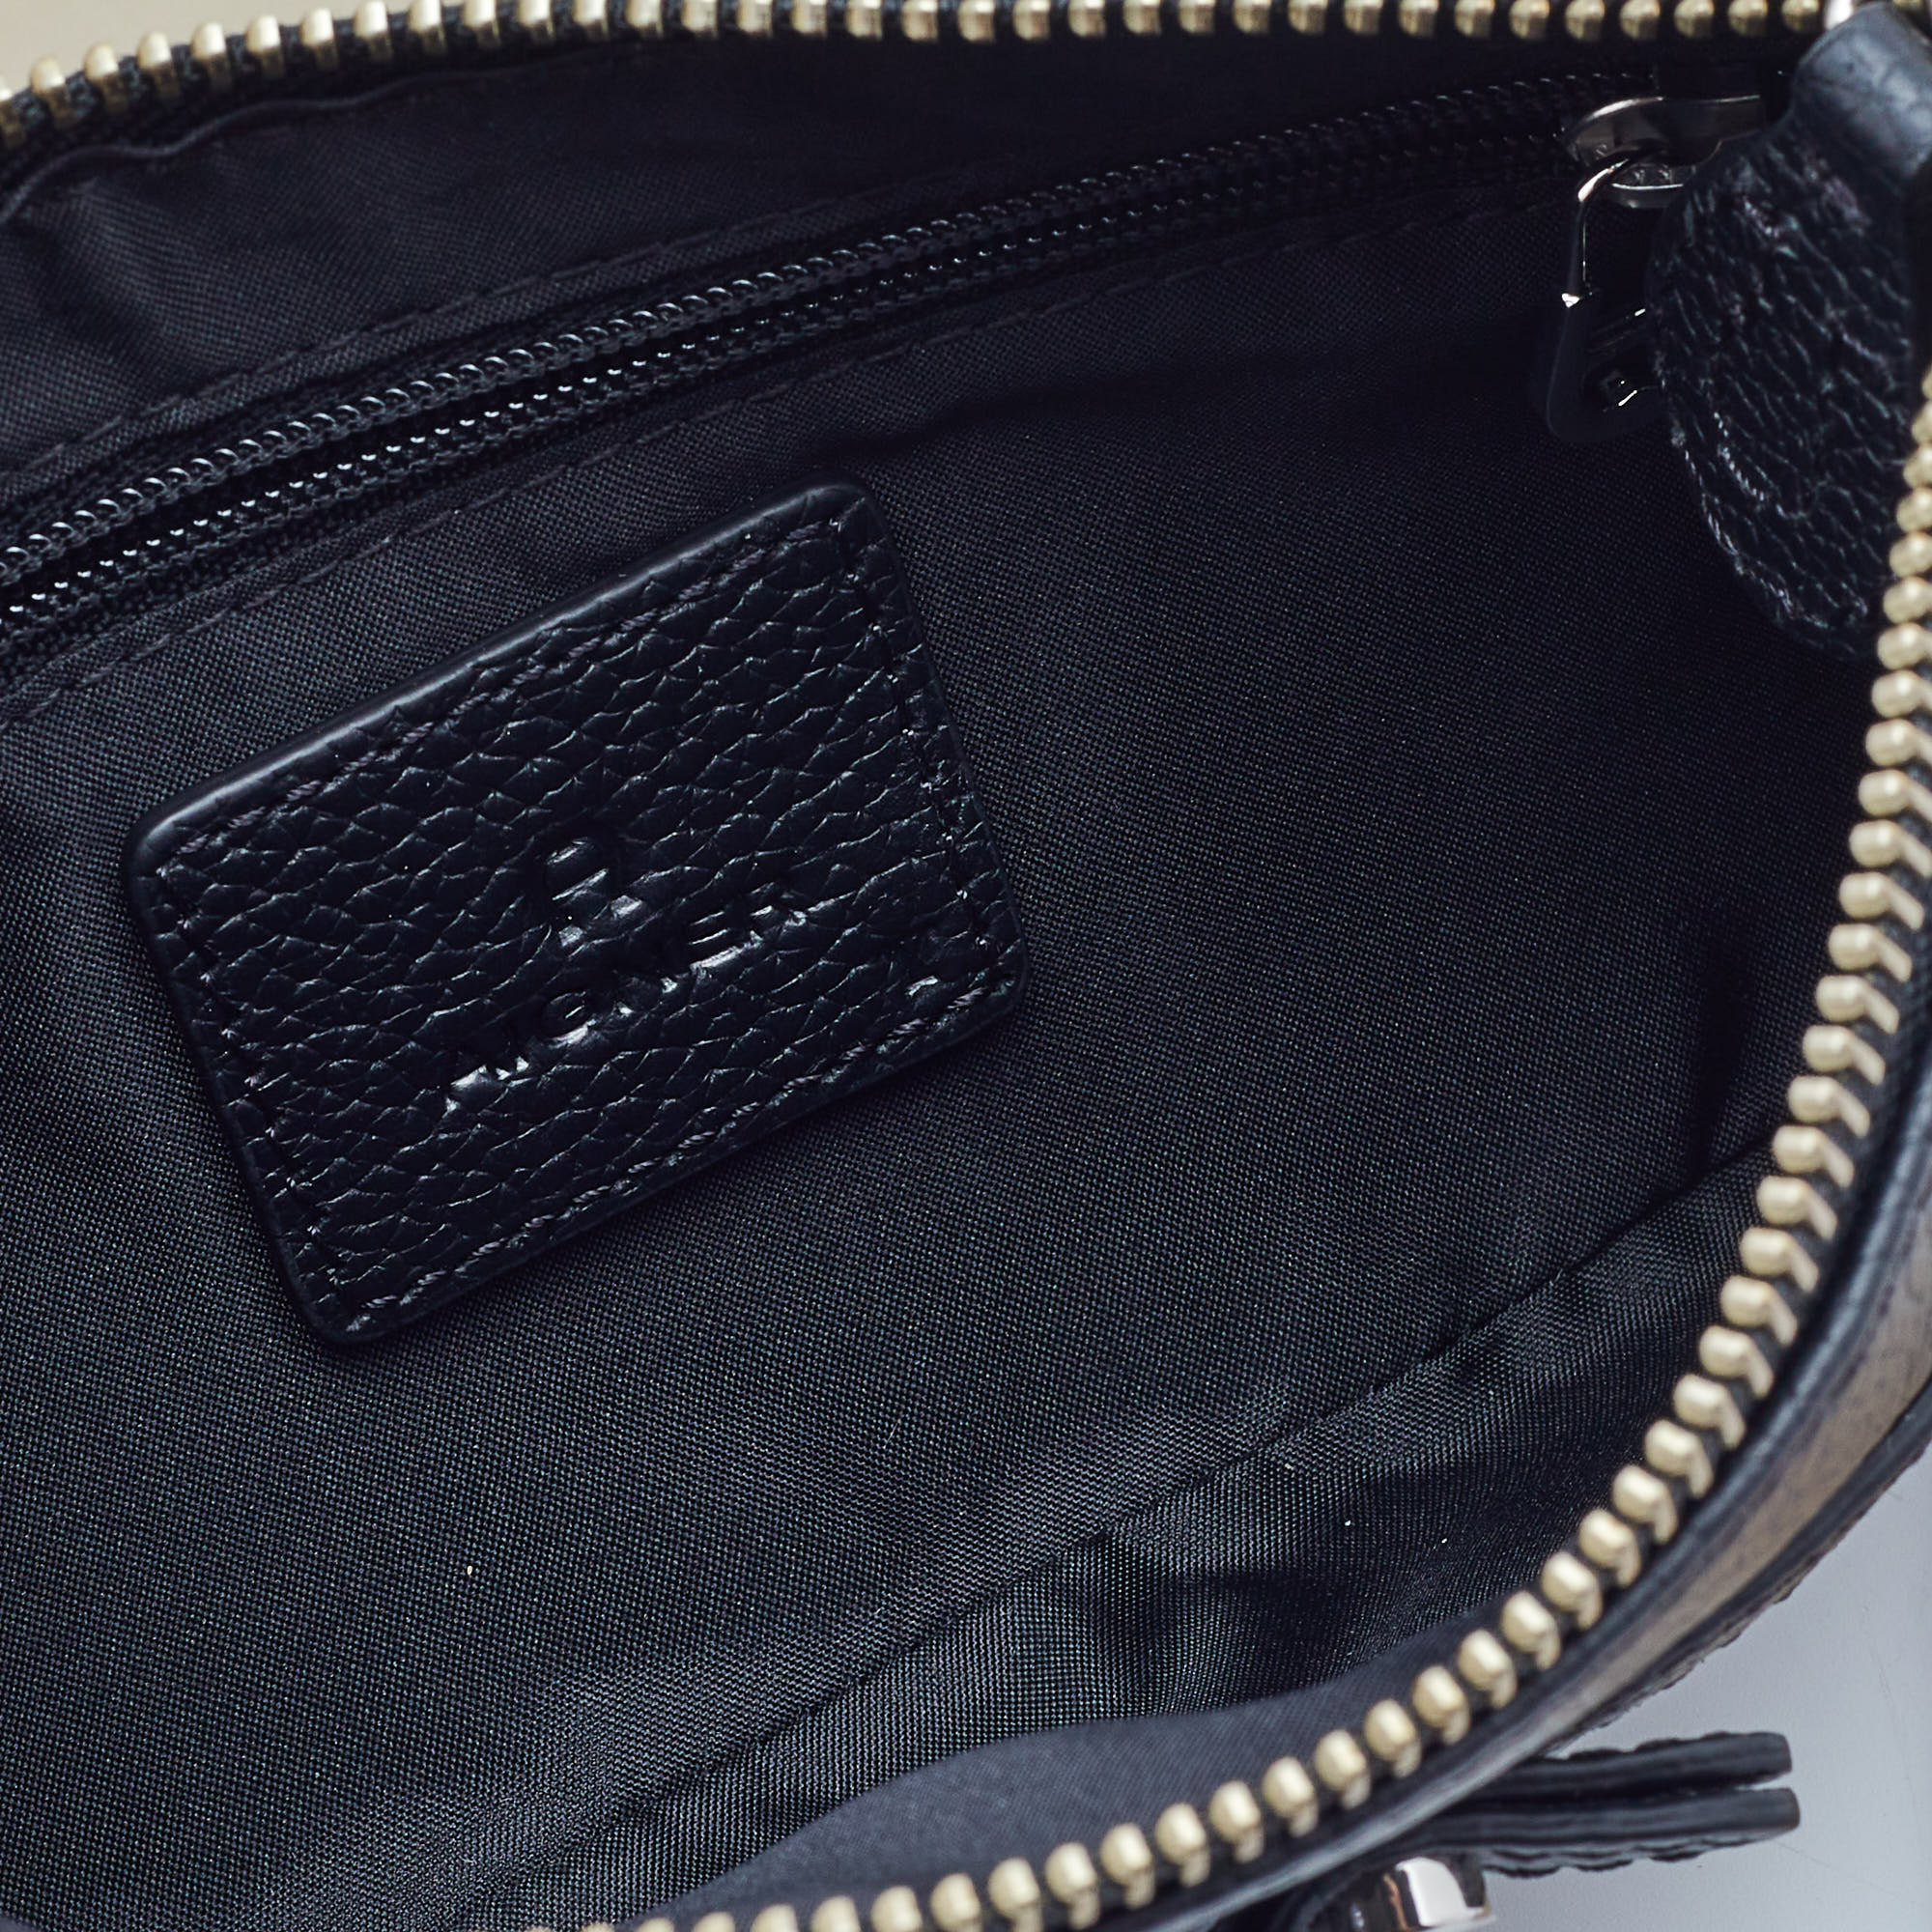 Aigner Black Leather Buckle Baguette Bag